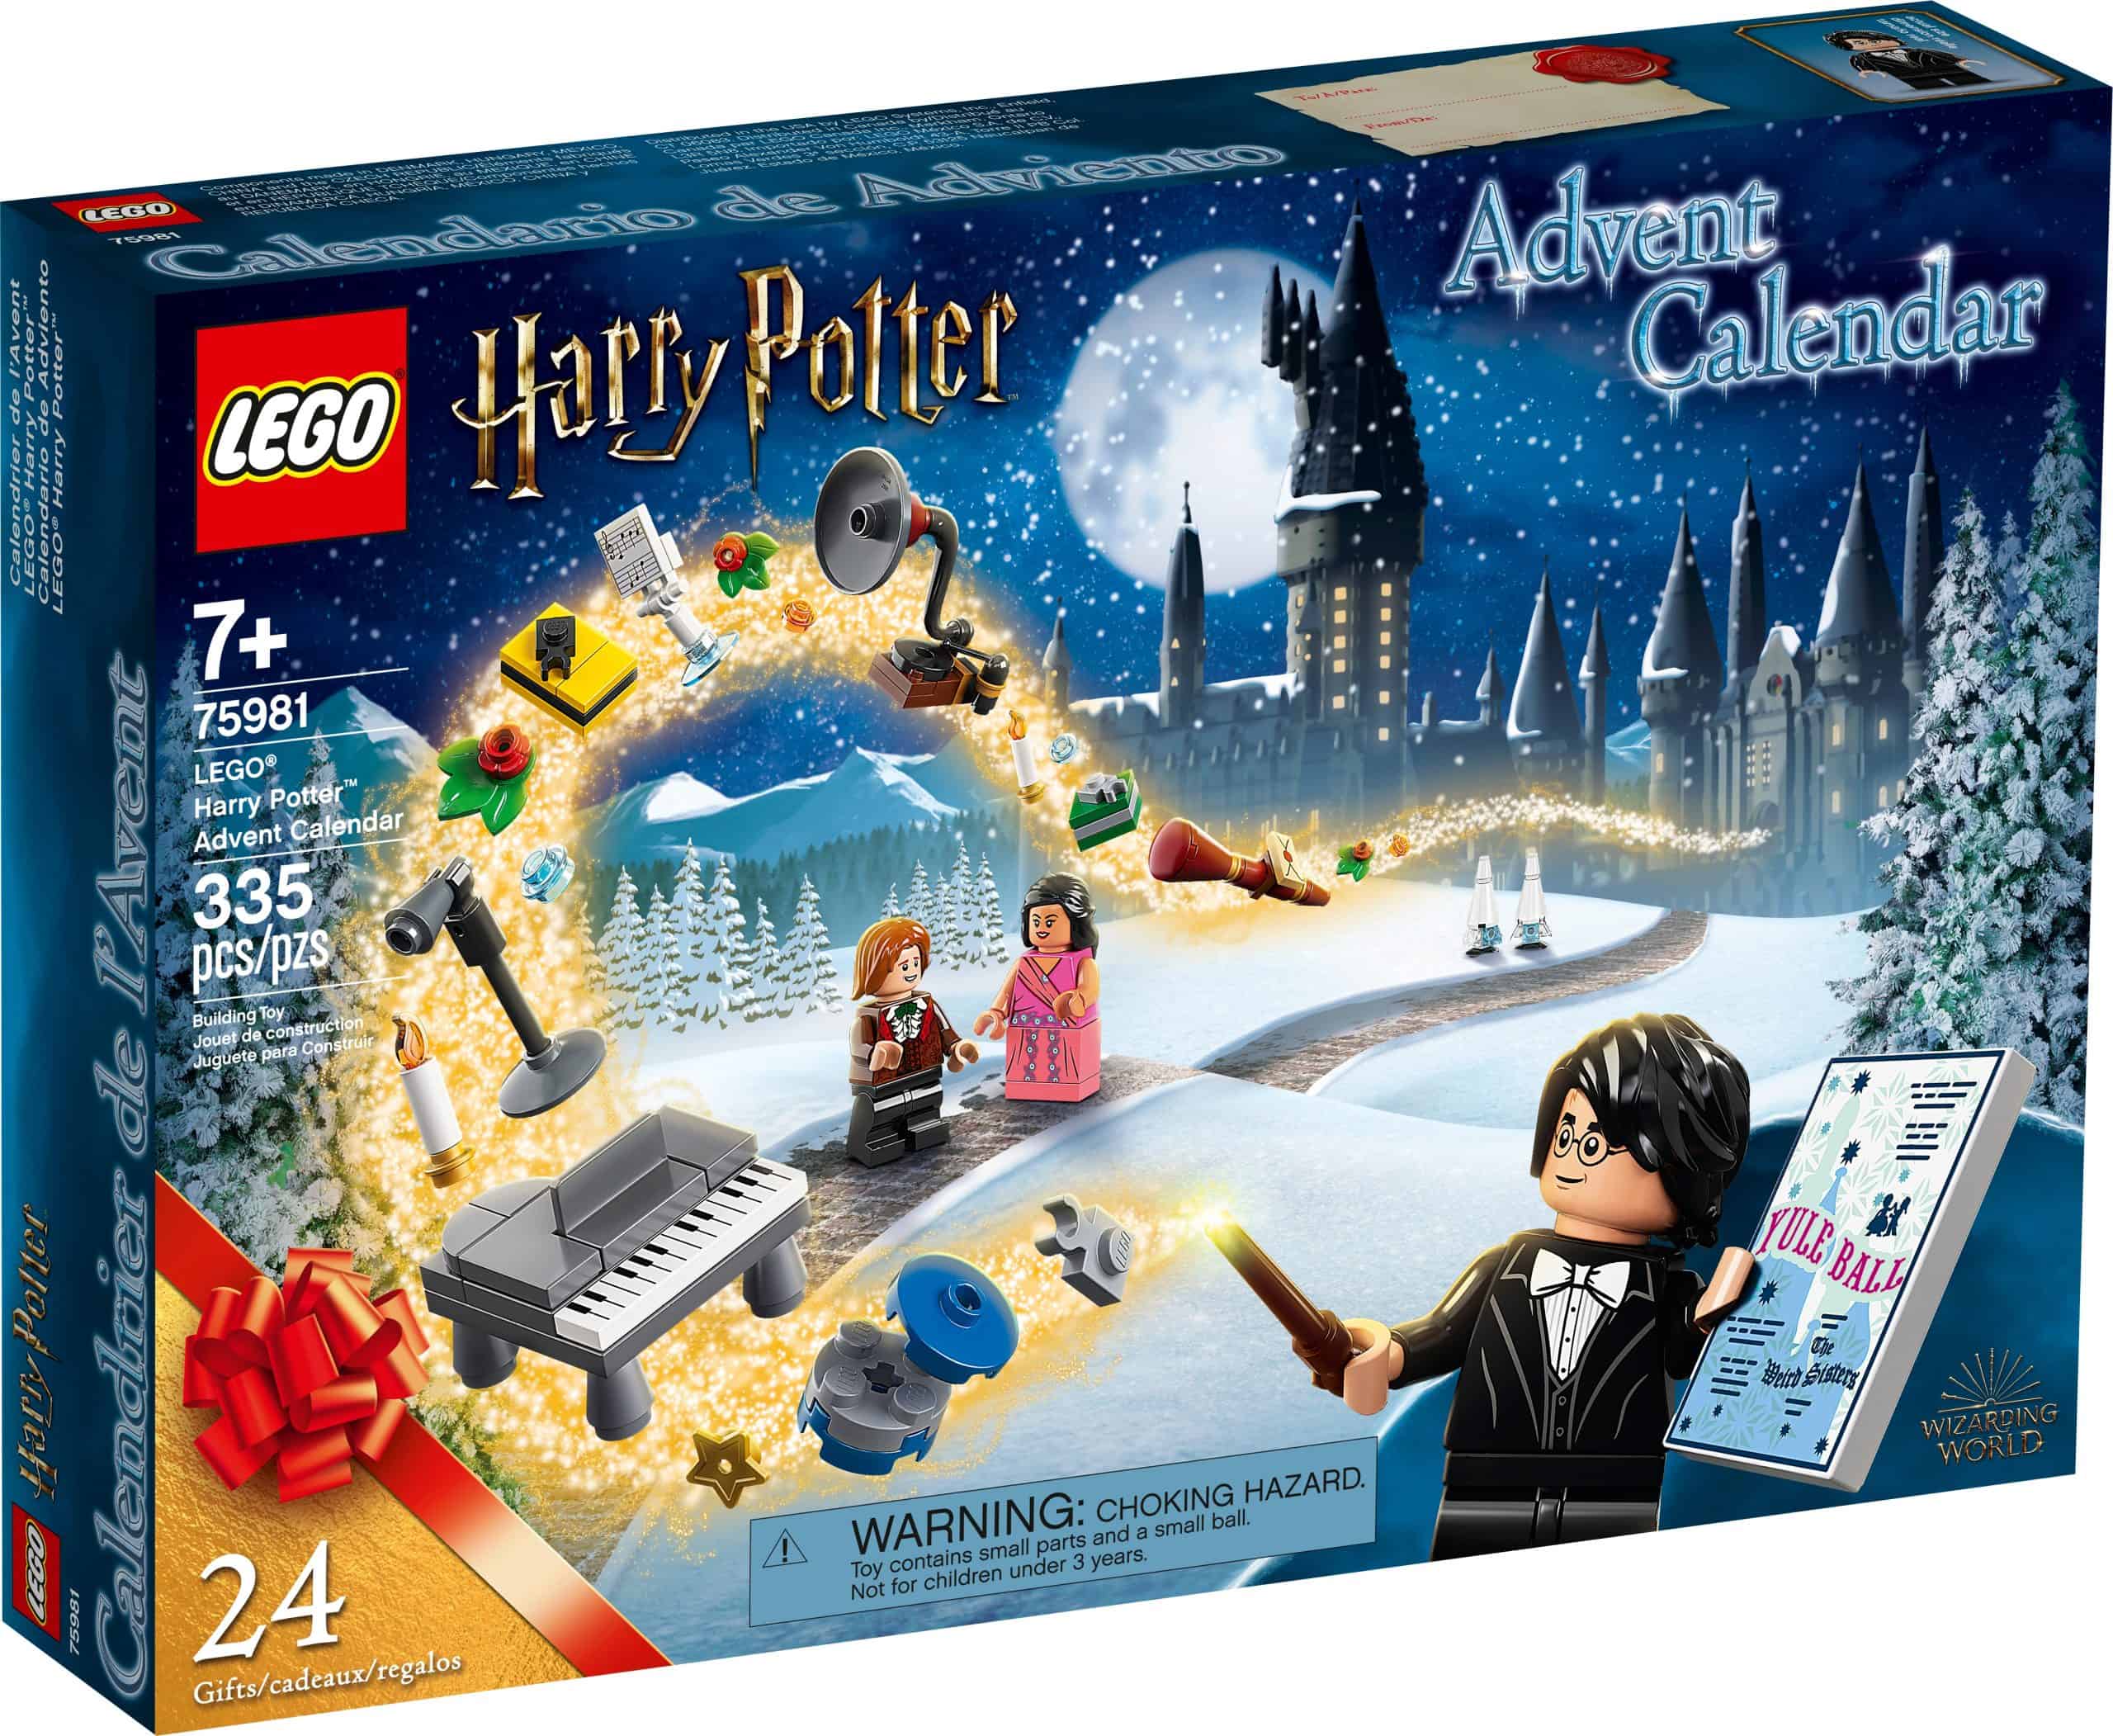 Lego 75981 Harry Potter Adventkalender